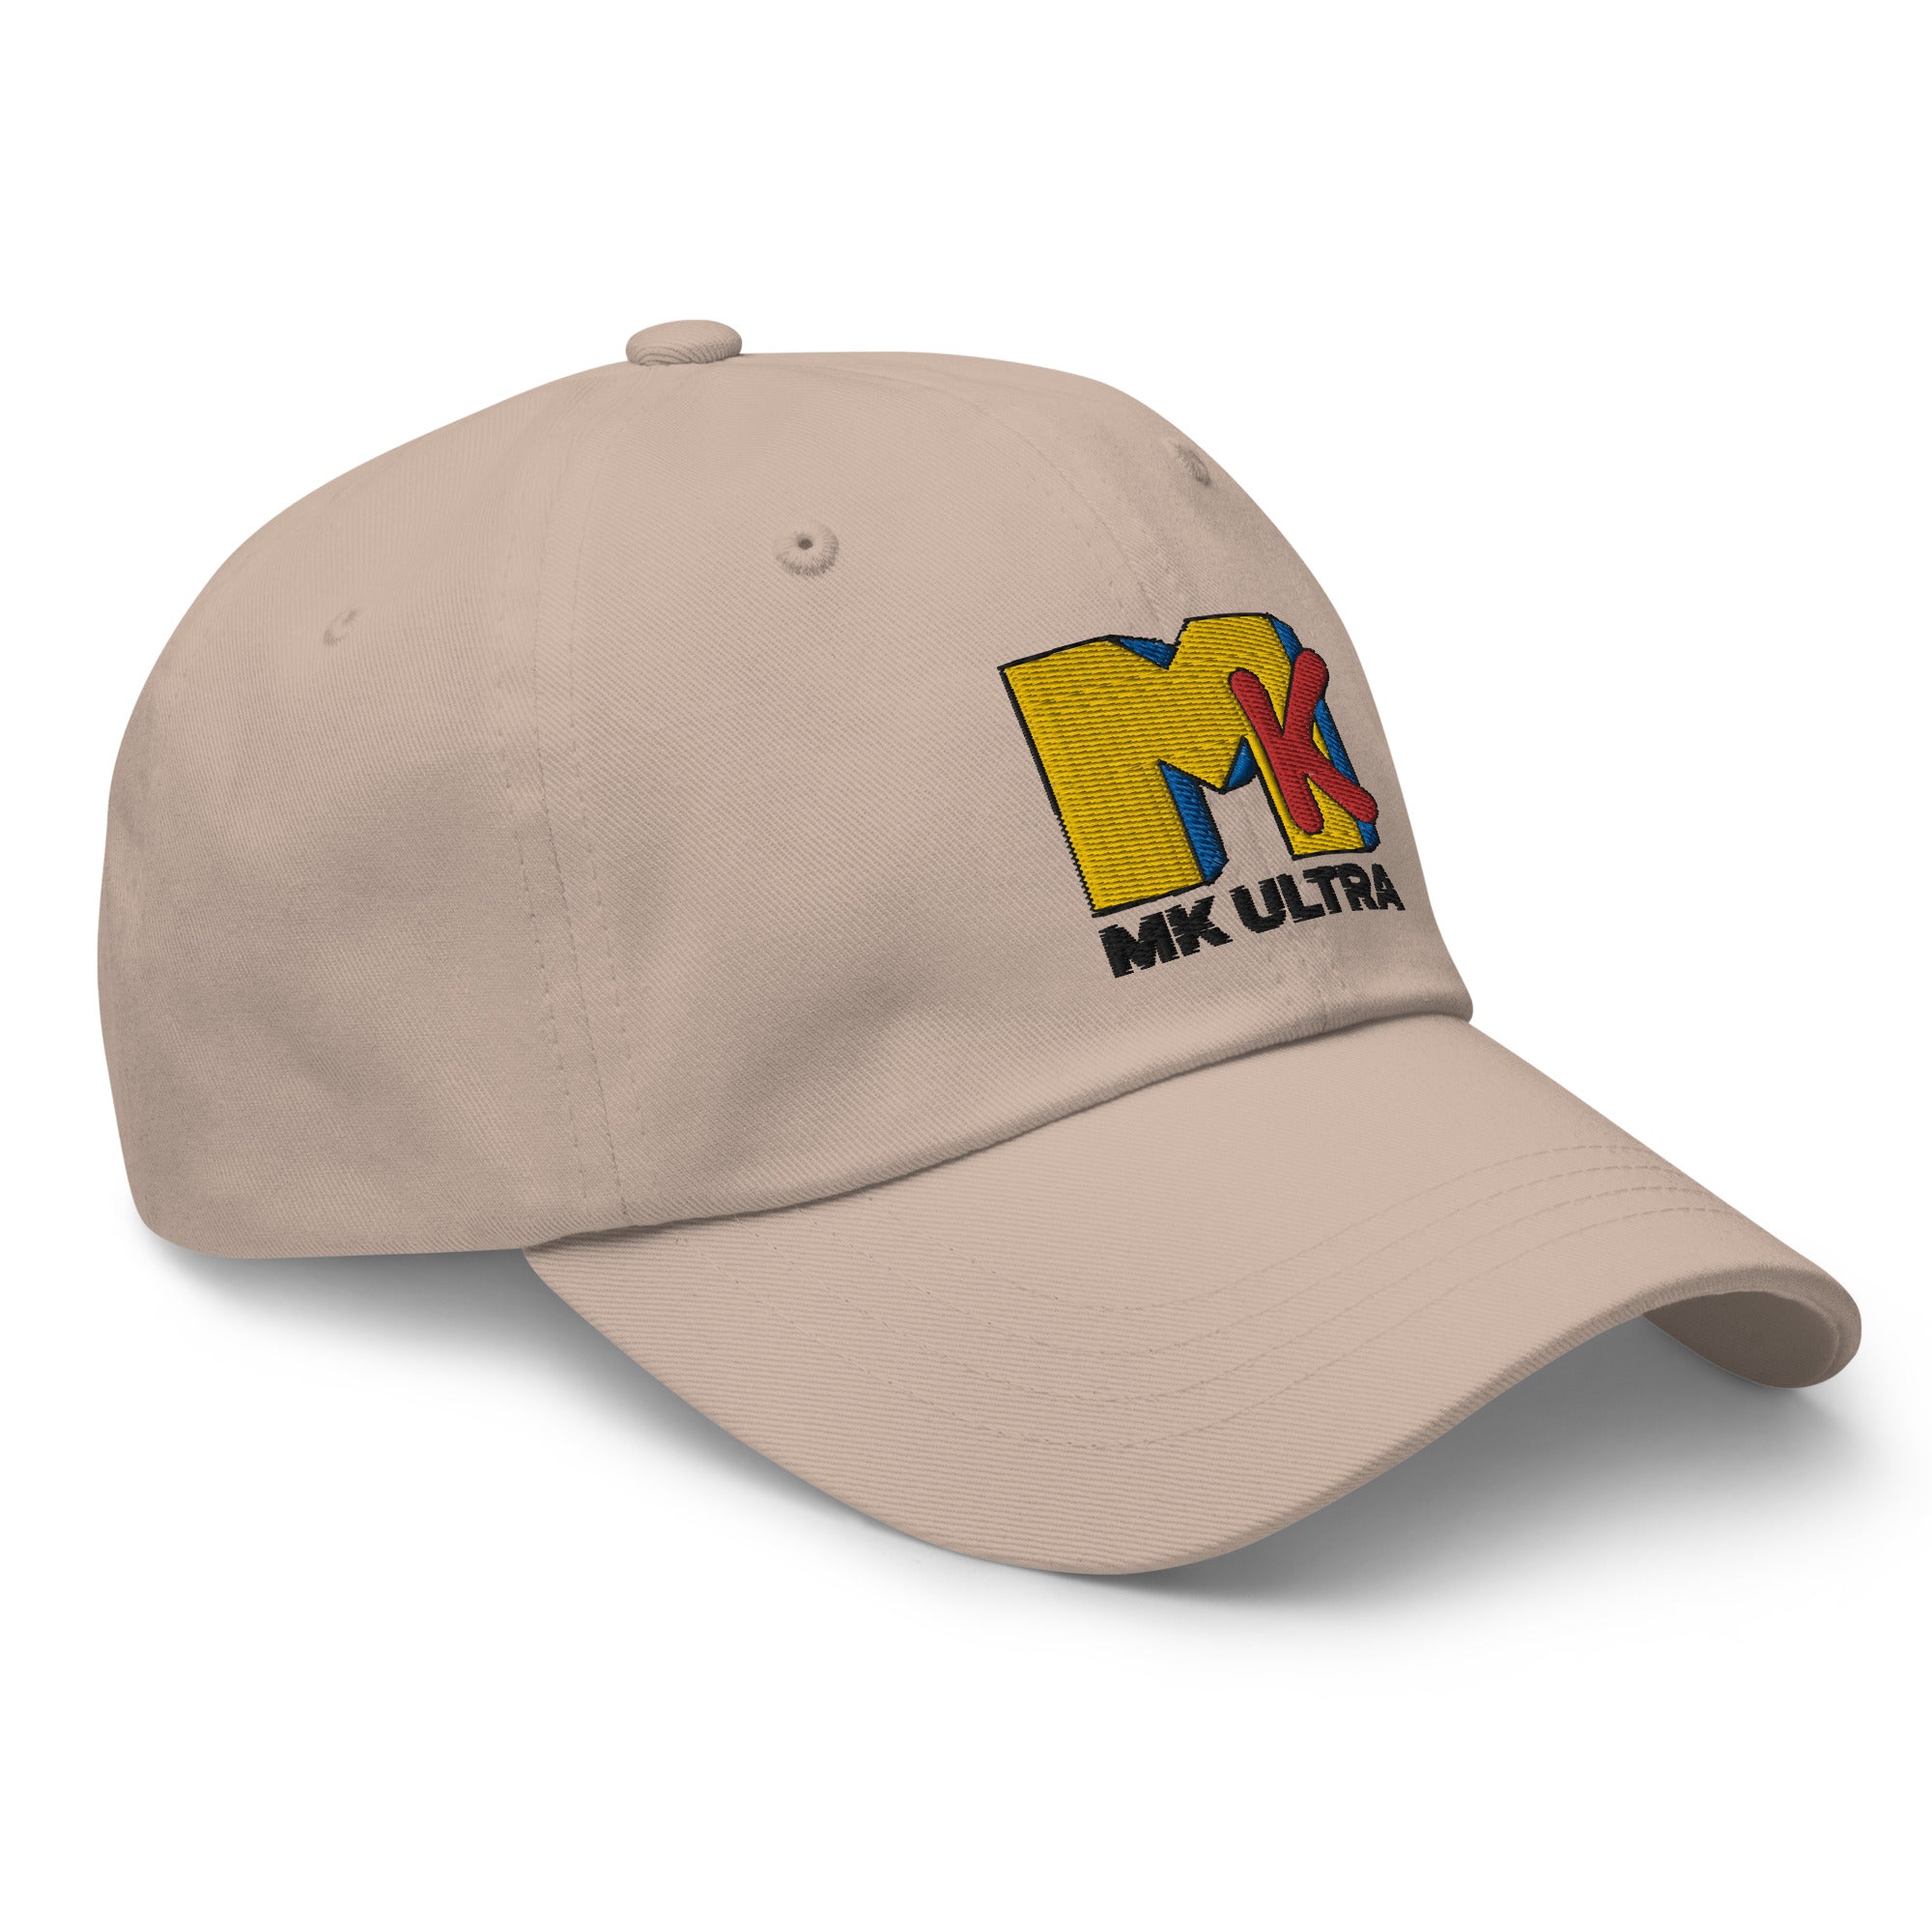 MK Ultra Dad Hat